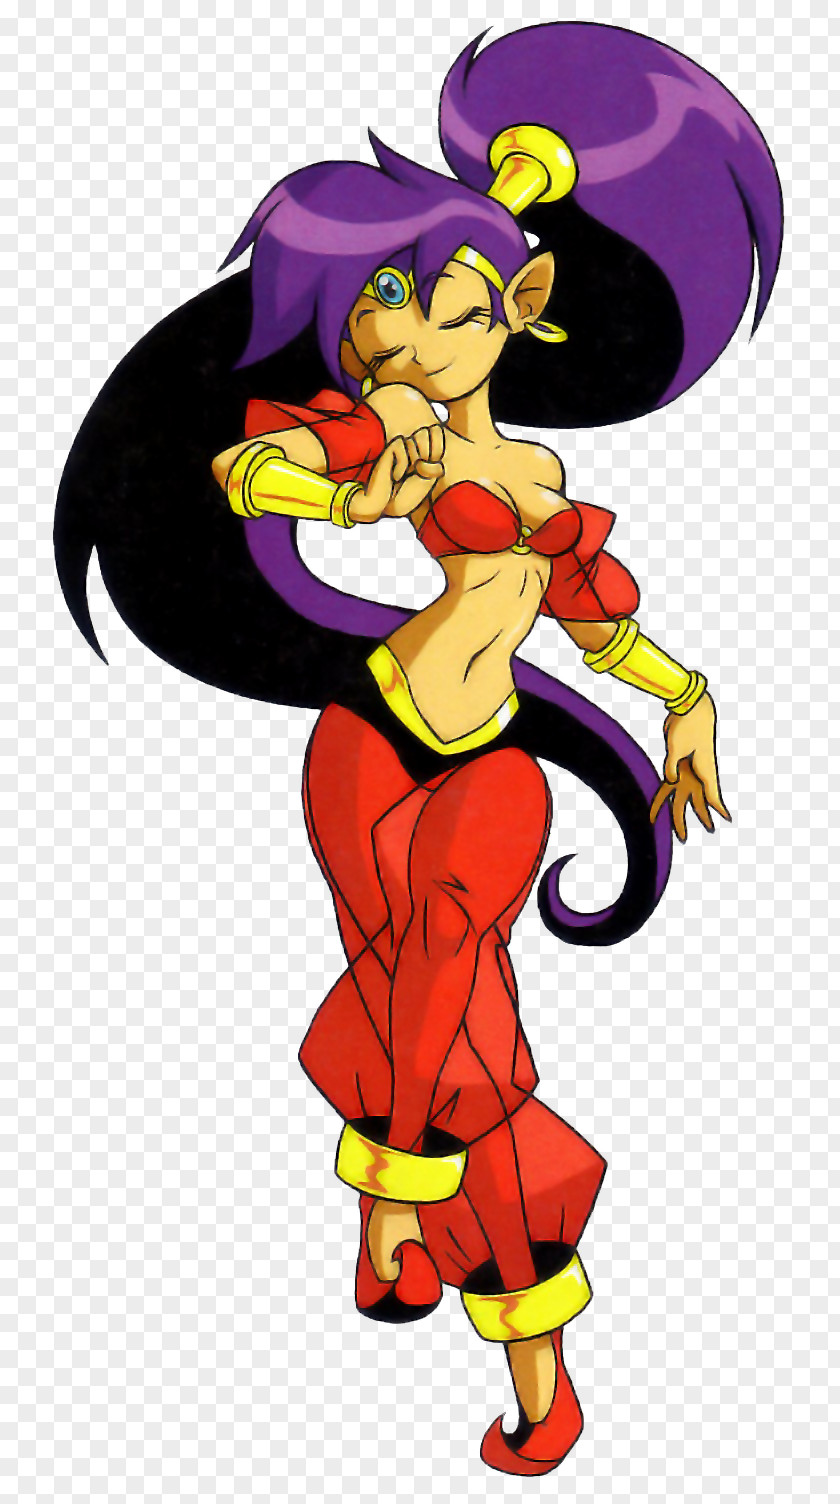 Shantae: Half-Genie Hero Shantae And The Pirate's Curse Earring Belly Dance PNG